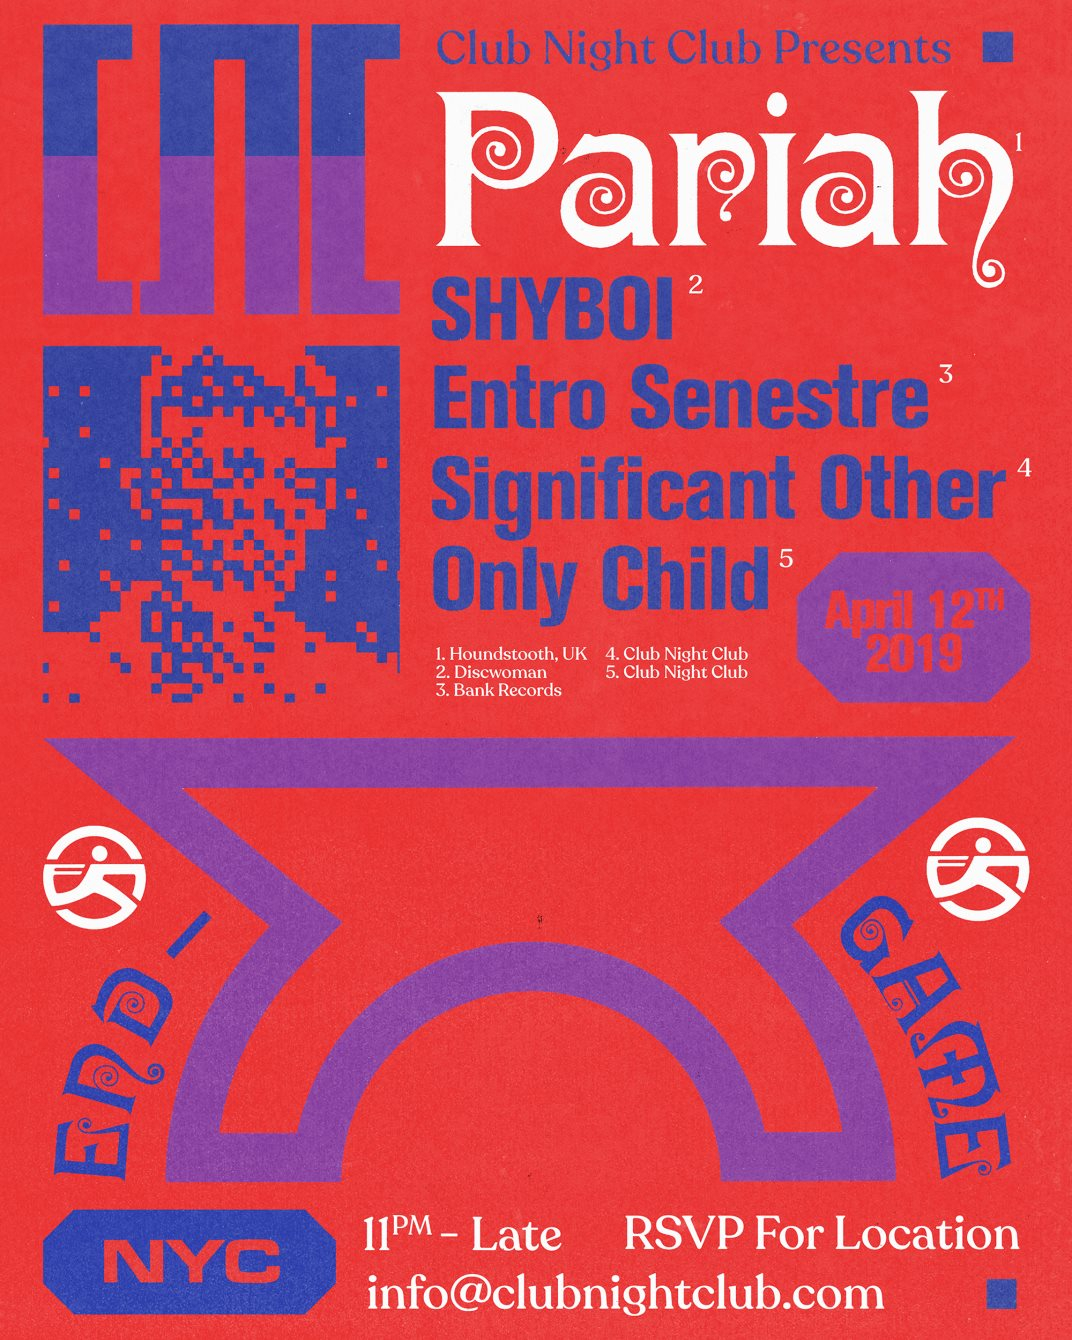 Club Night Club presents: Pariah - Flyer front